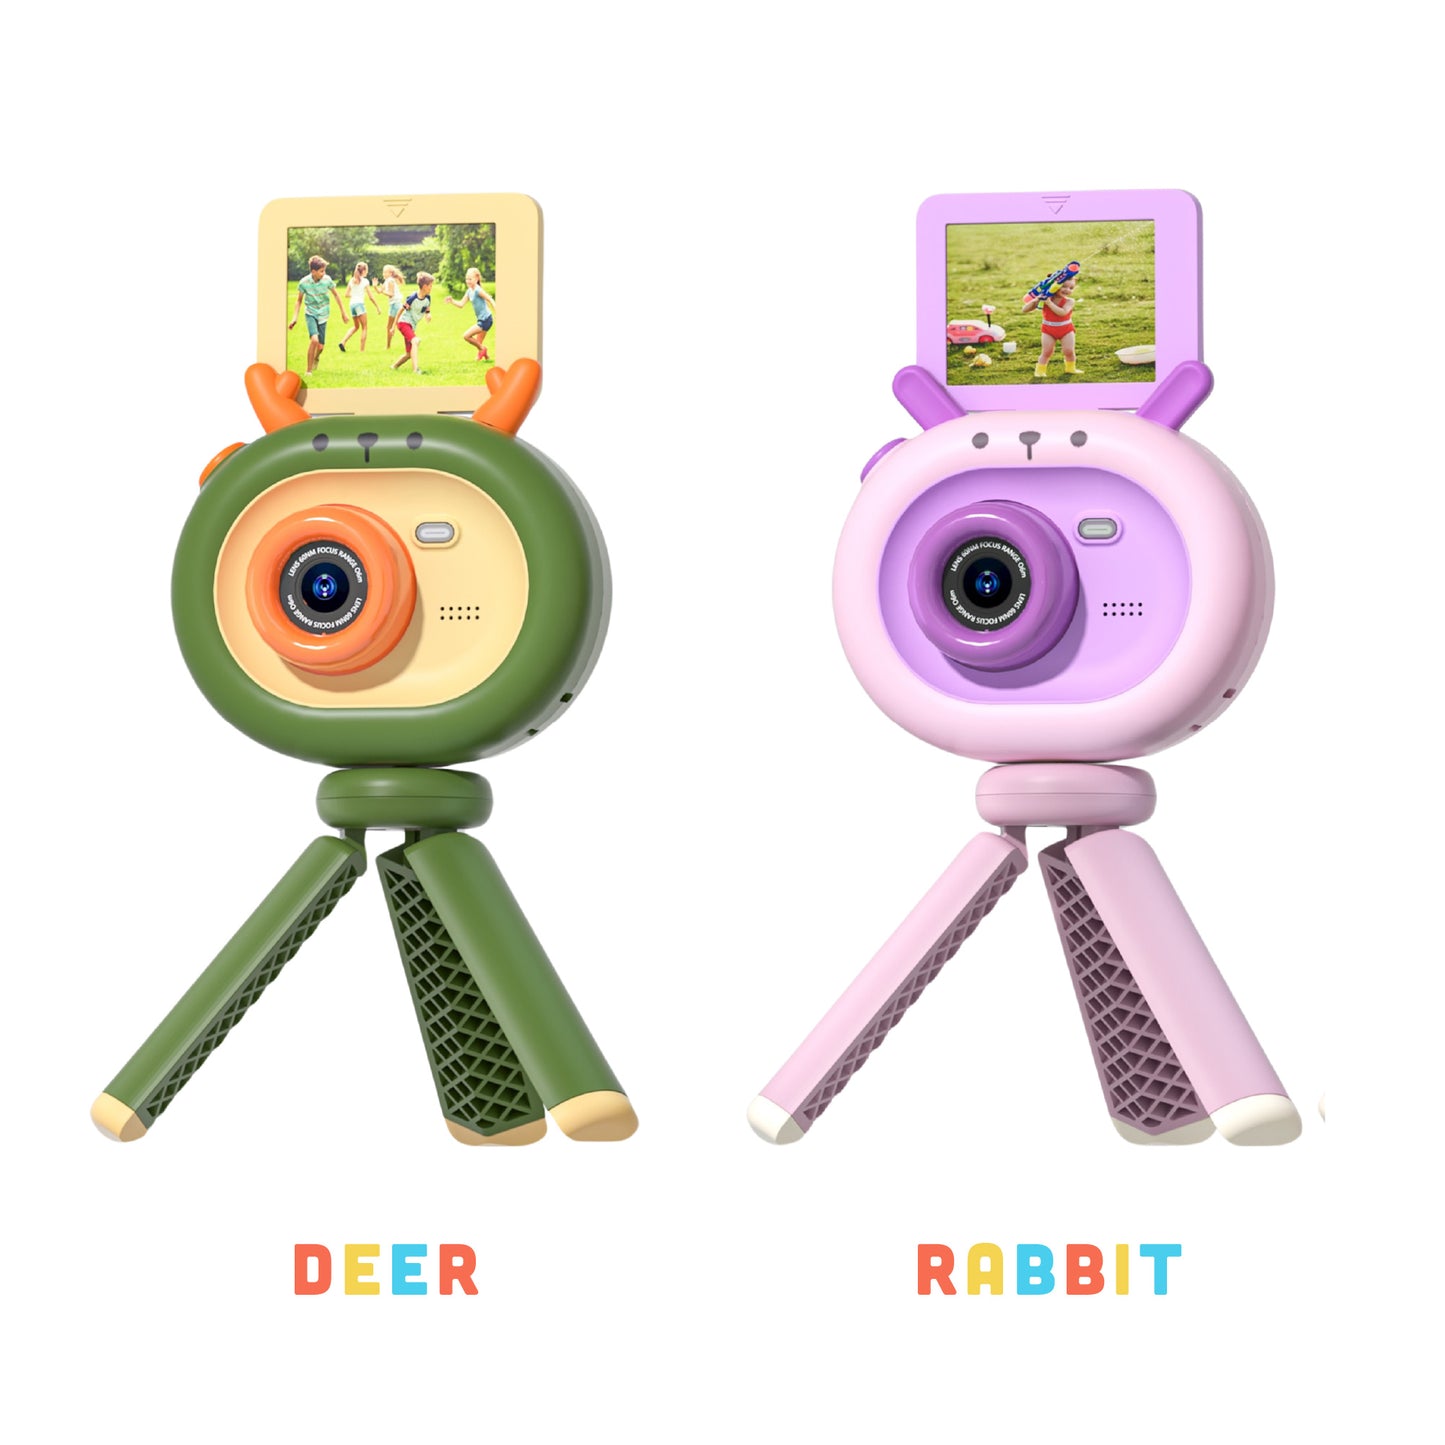 Berpy キッズカメラ 子供用 おもちゃ トイカメラ 動画撮影 カメラ ベビー 手持ち 三脚 取り外し可能 HD 32GB microSDカード付属 男の子 女の子 知育玩具 誕生日 プレゼント